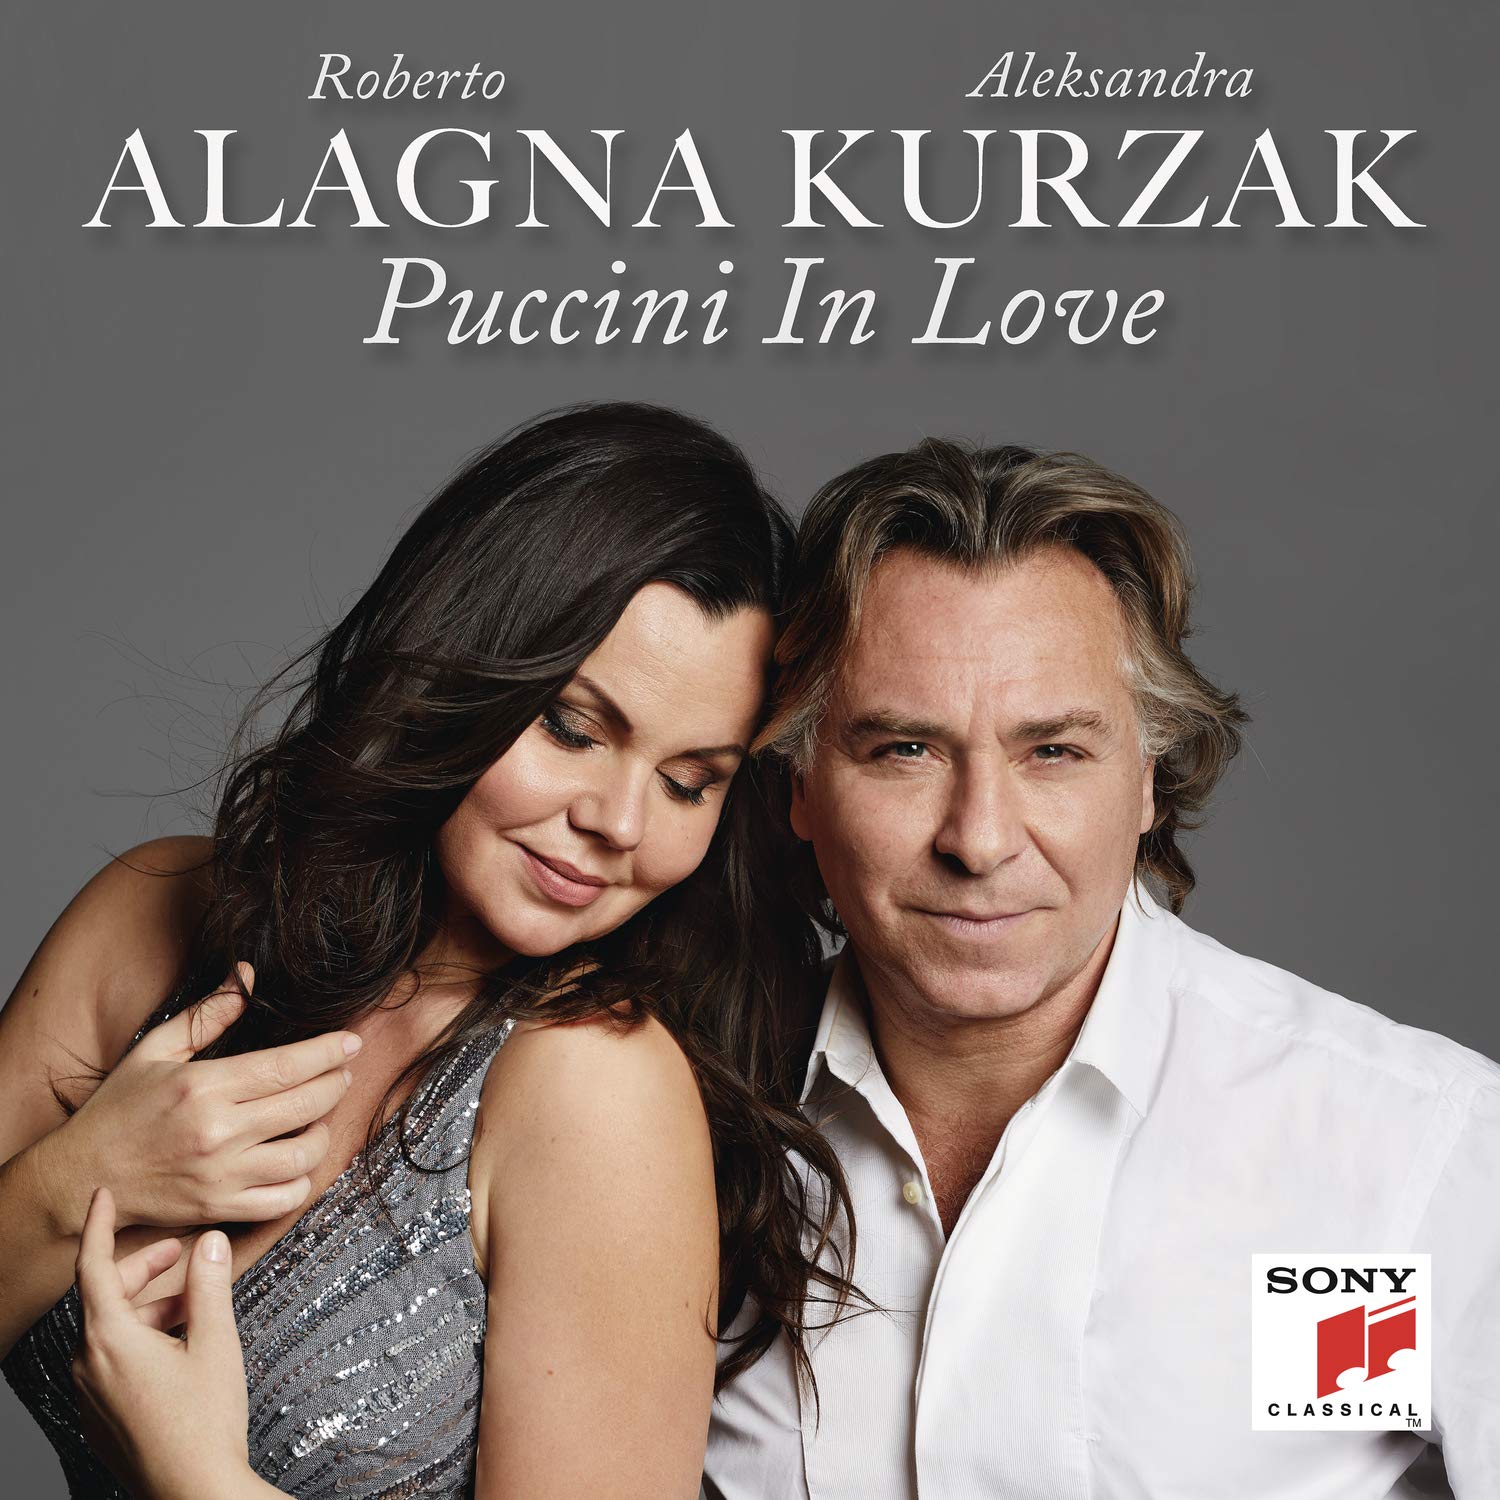 Puccini in Love: amor sin distingos